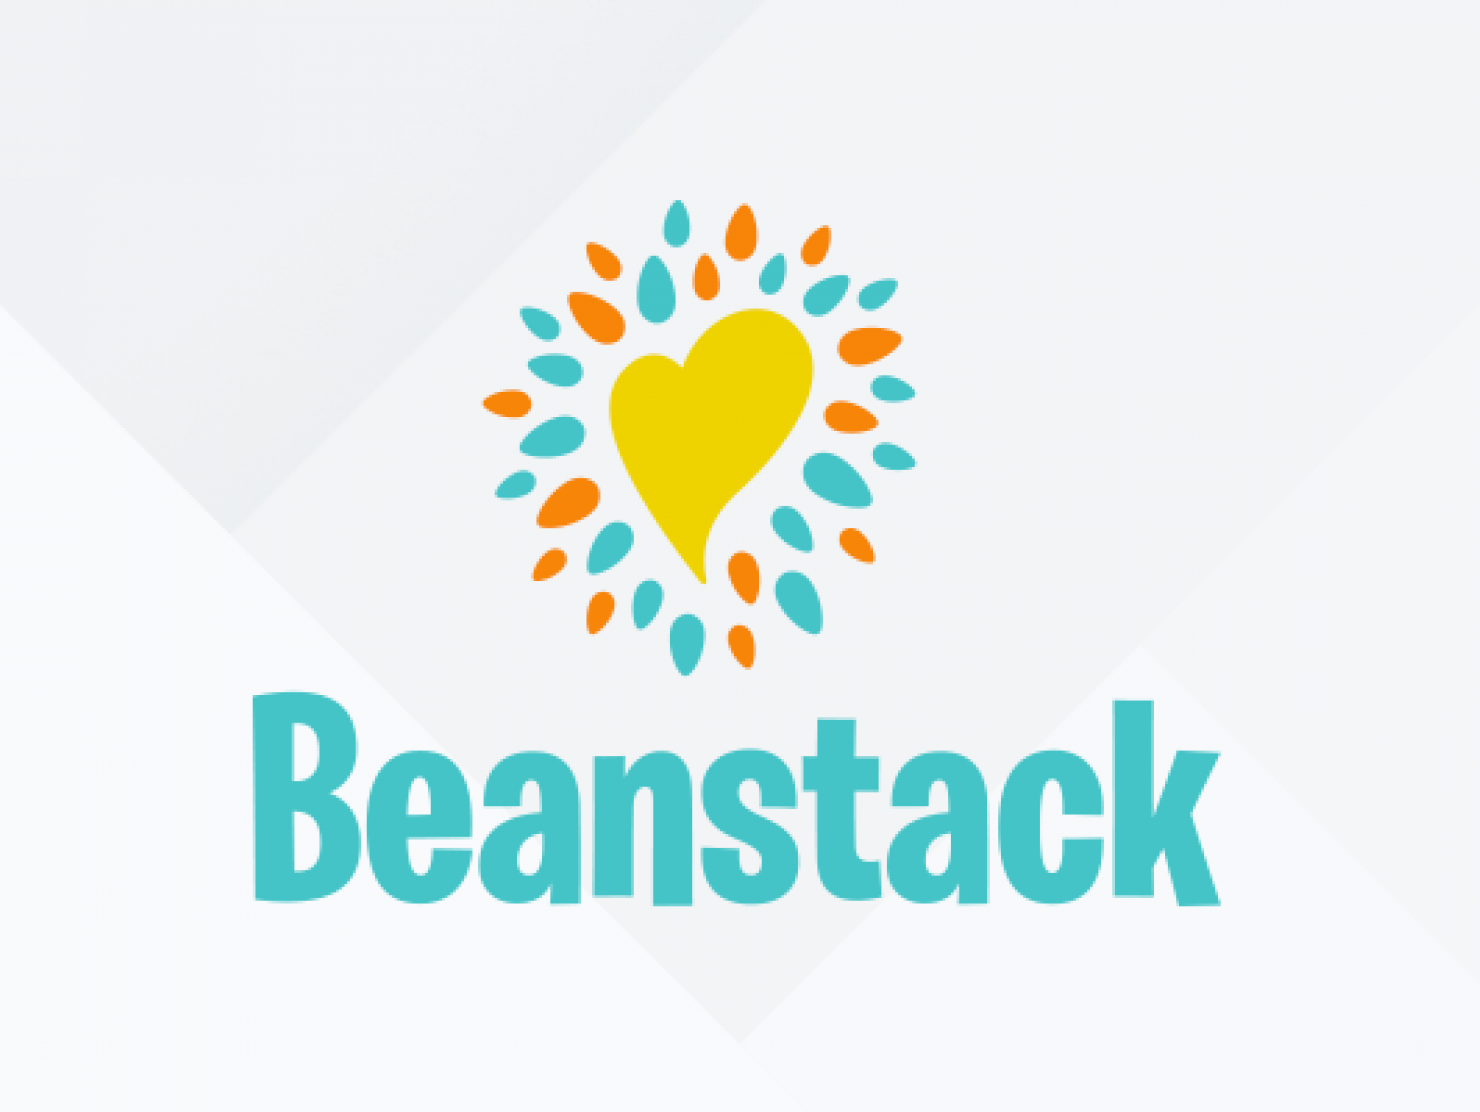 Beanstack logo